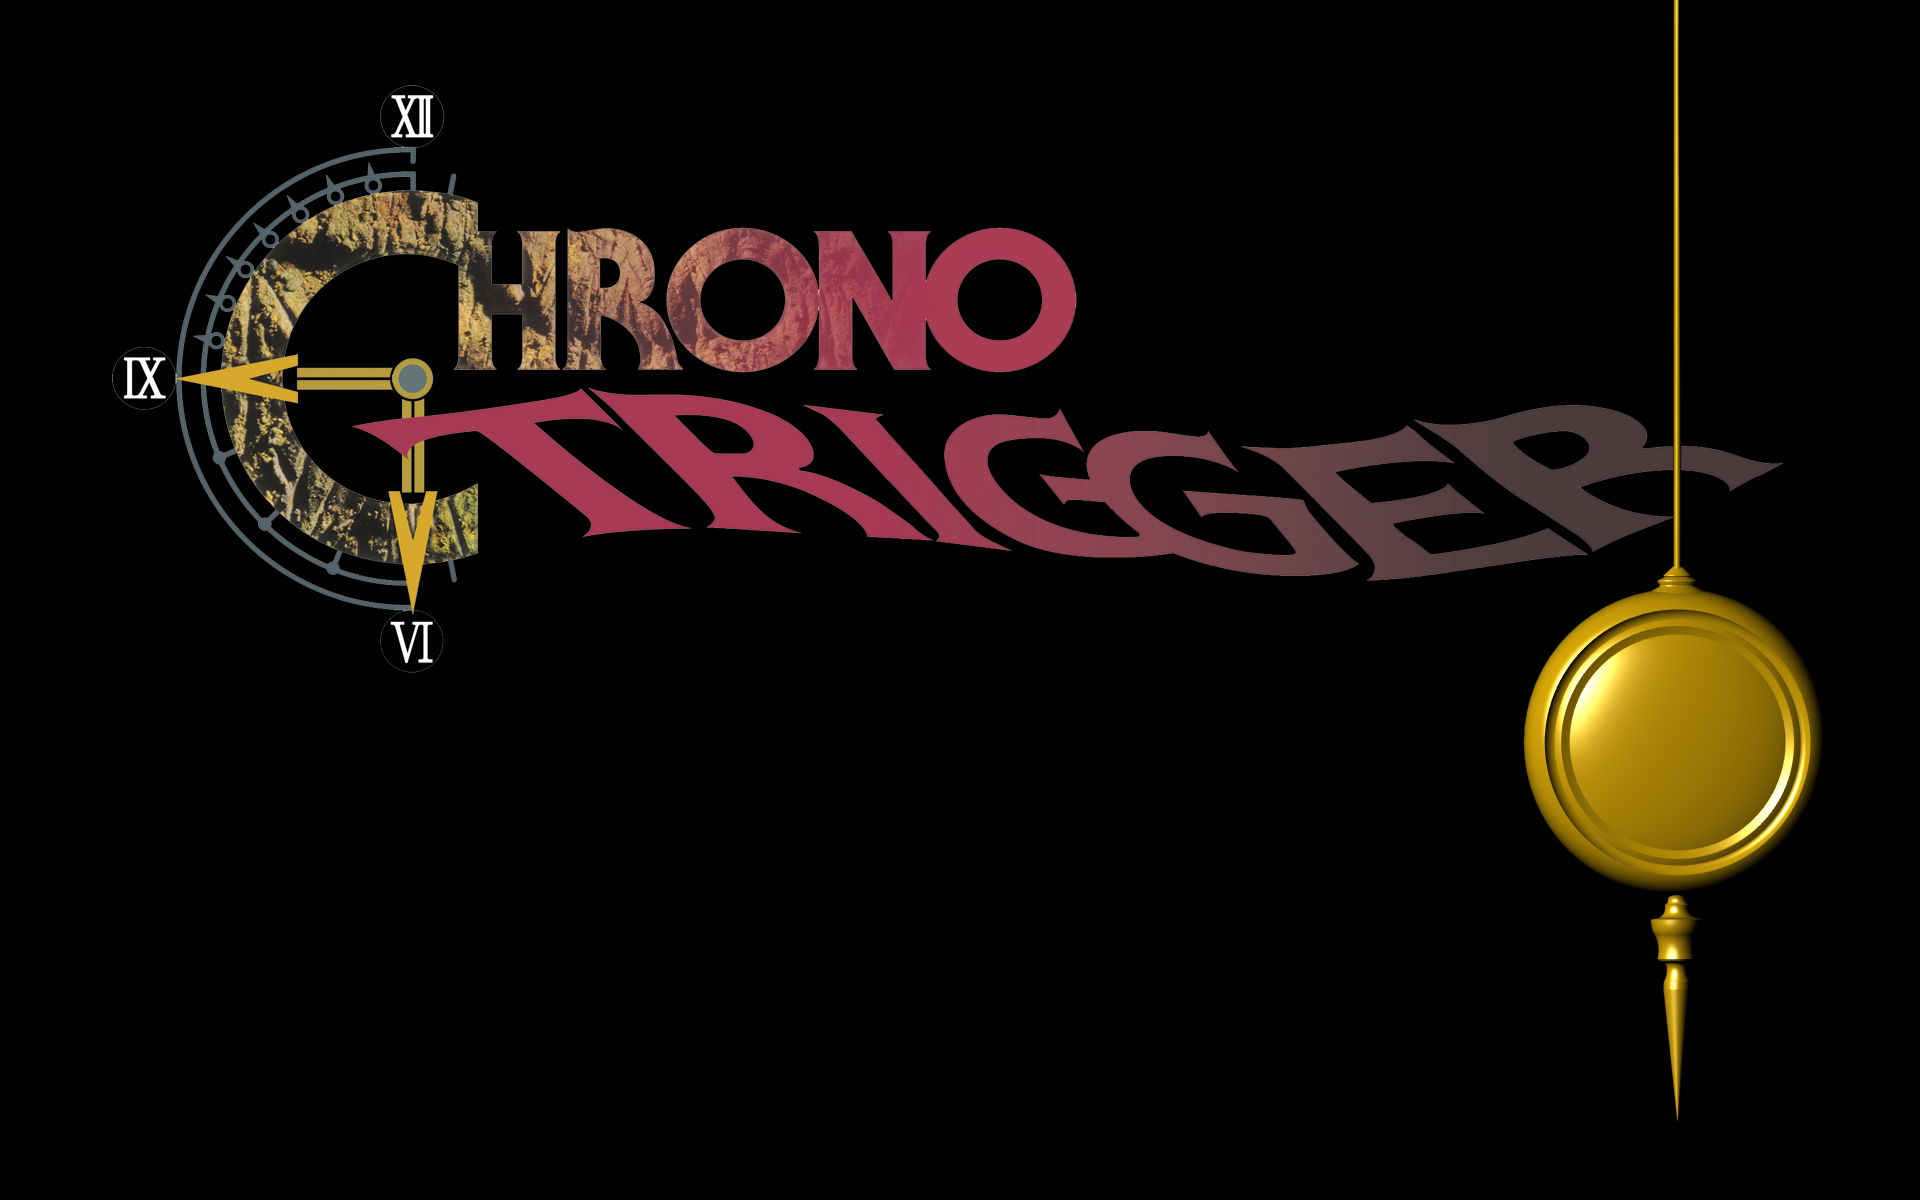 Chrono Trigger Wallpaper